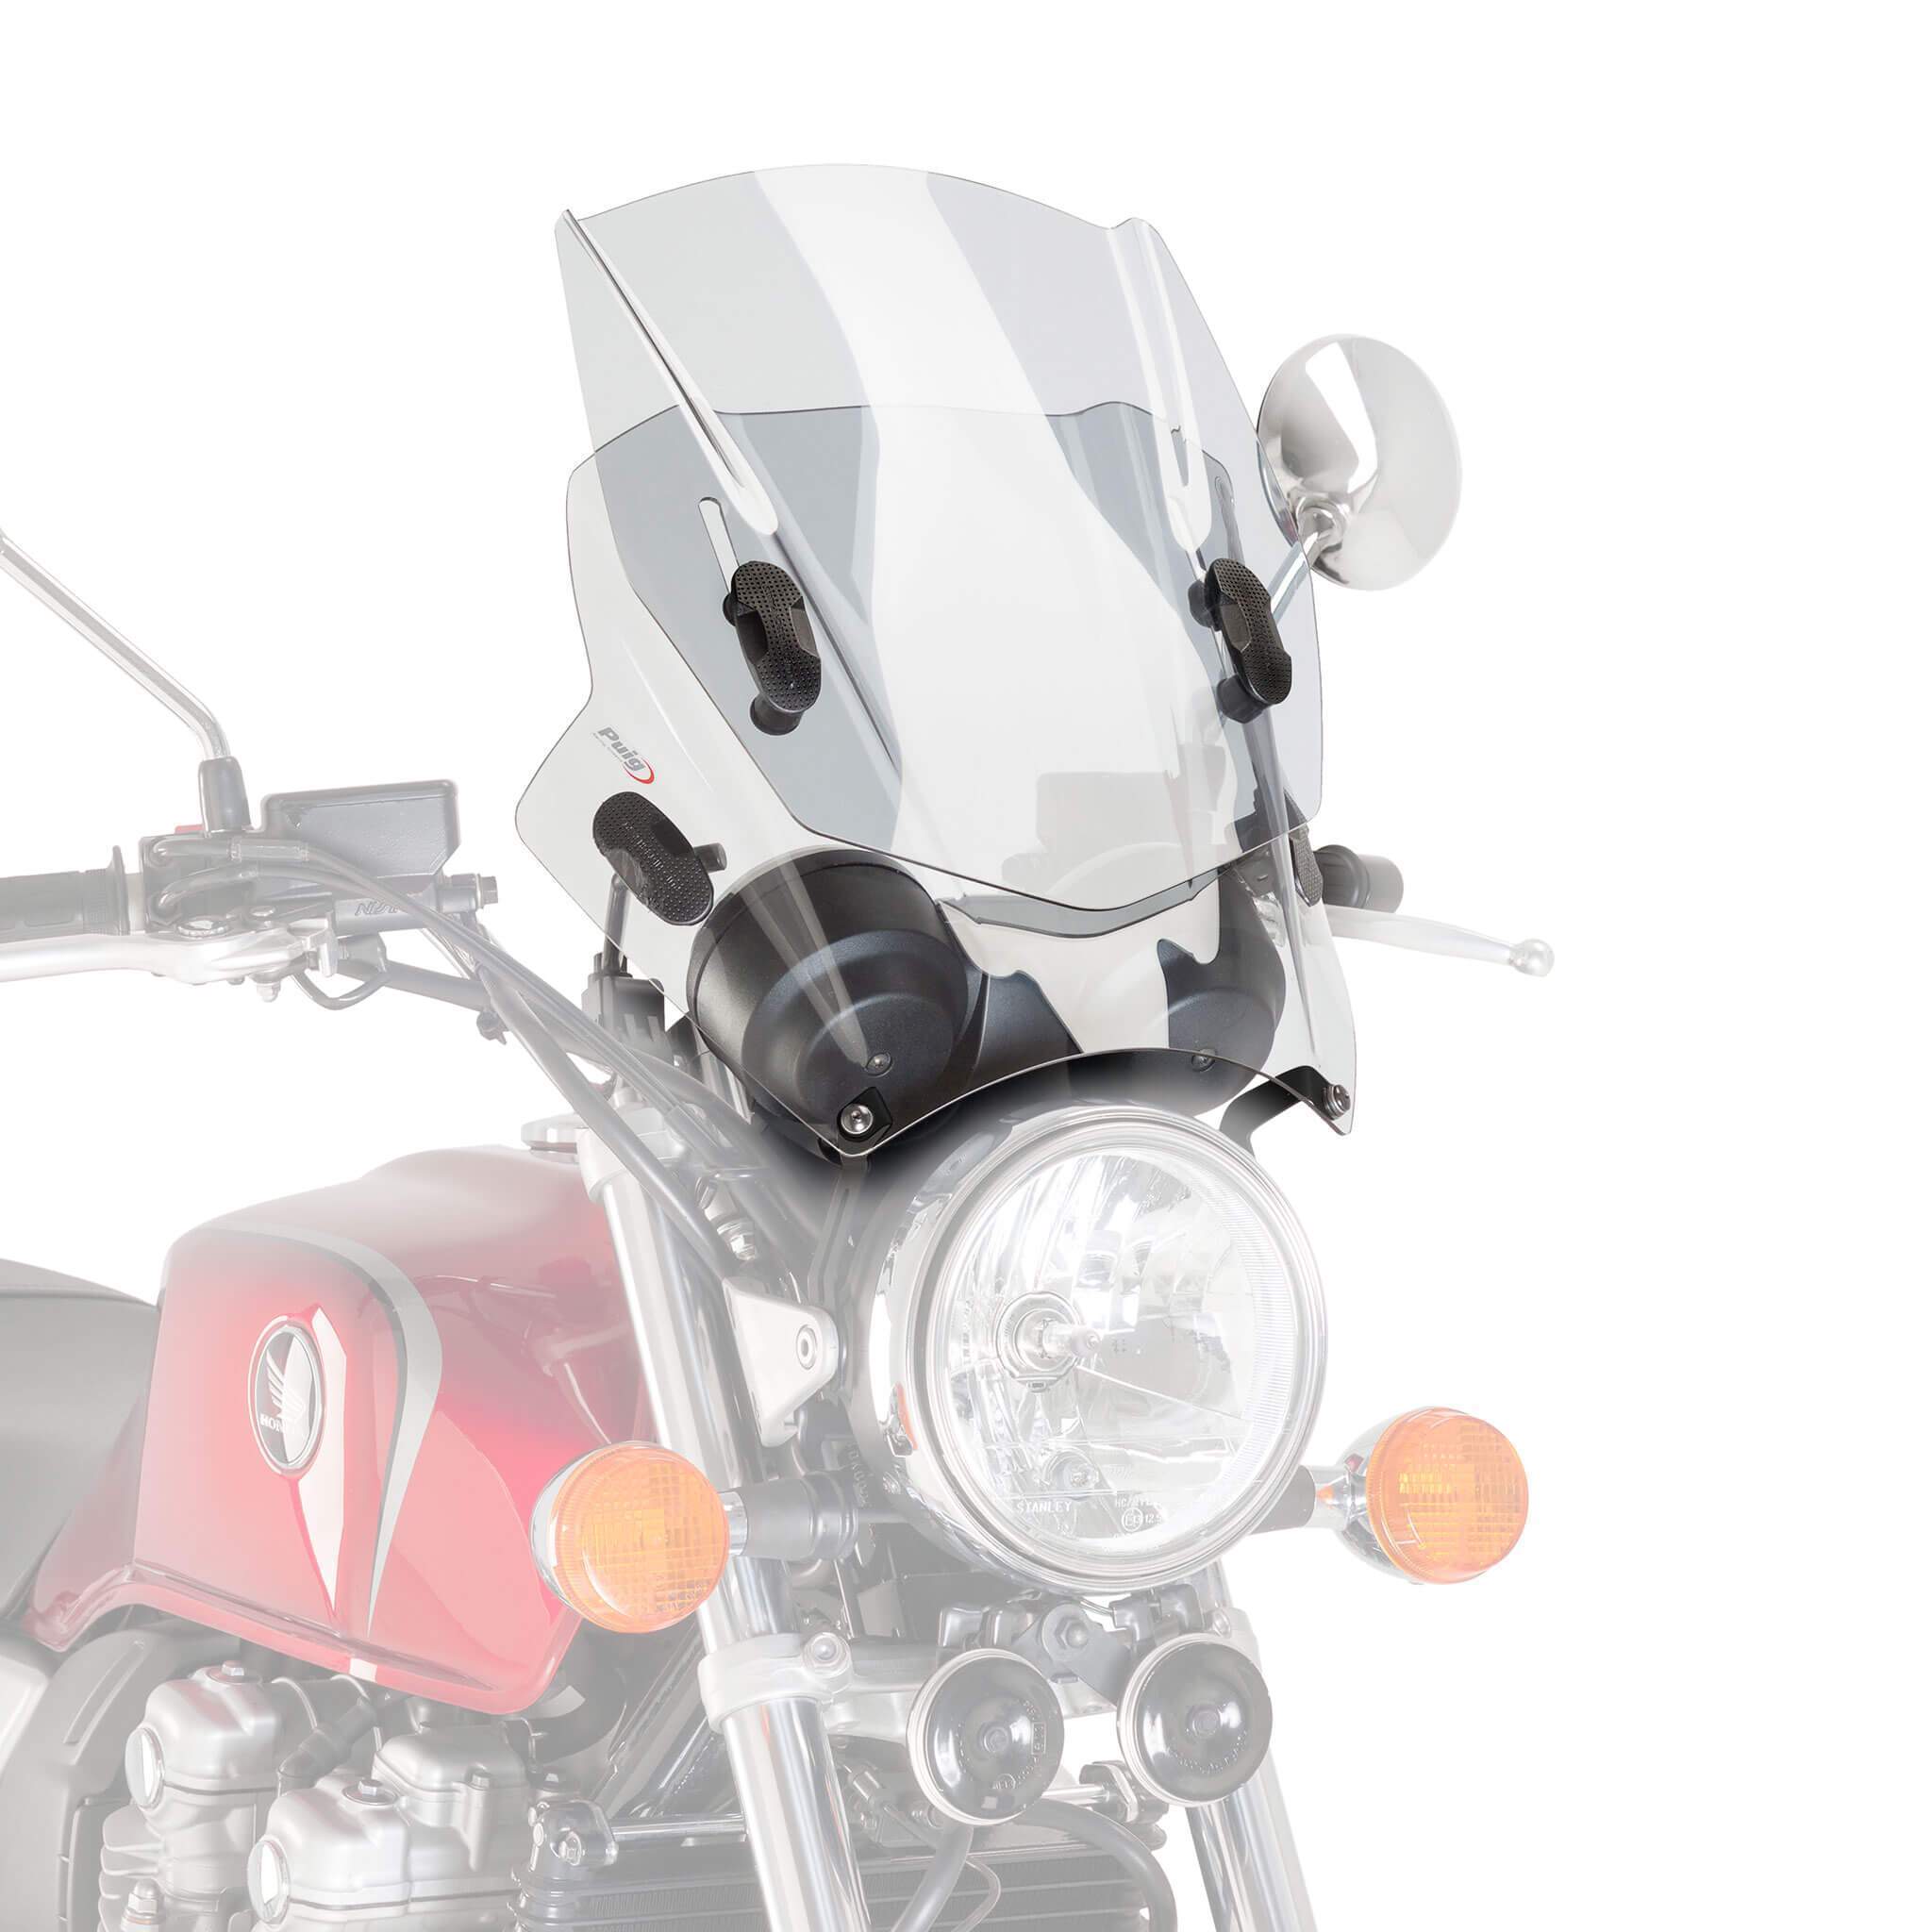 Puig Up & Down Screen | Clear | Triumph Thruxton 900 2004>2015-M2193W-Screens-Pyramid Motorcycle Accessories